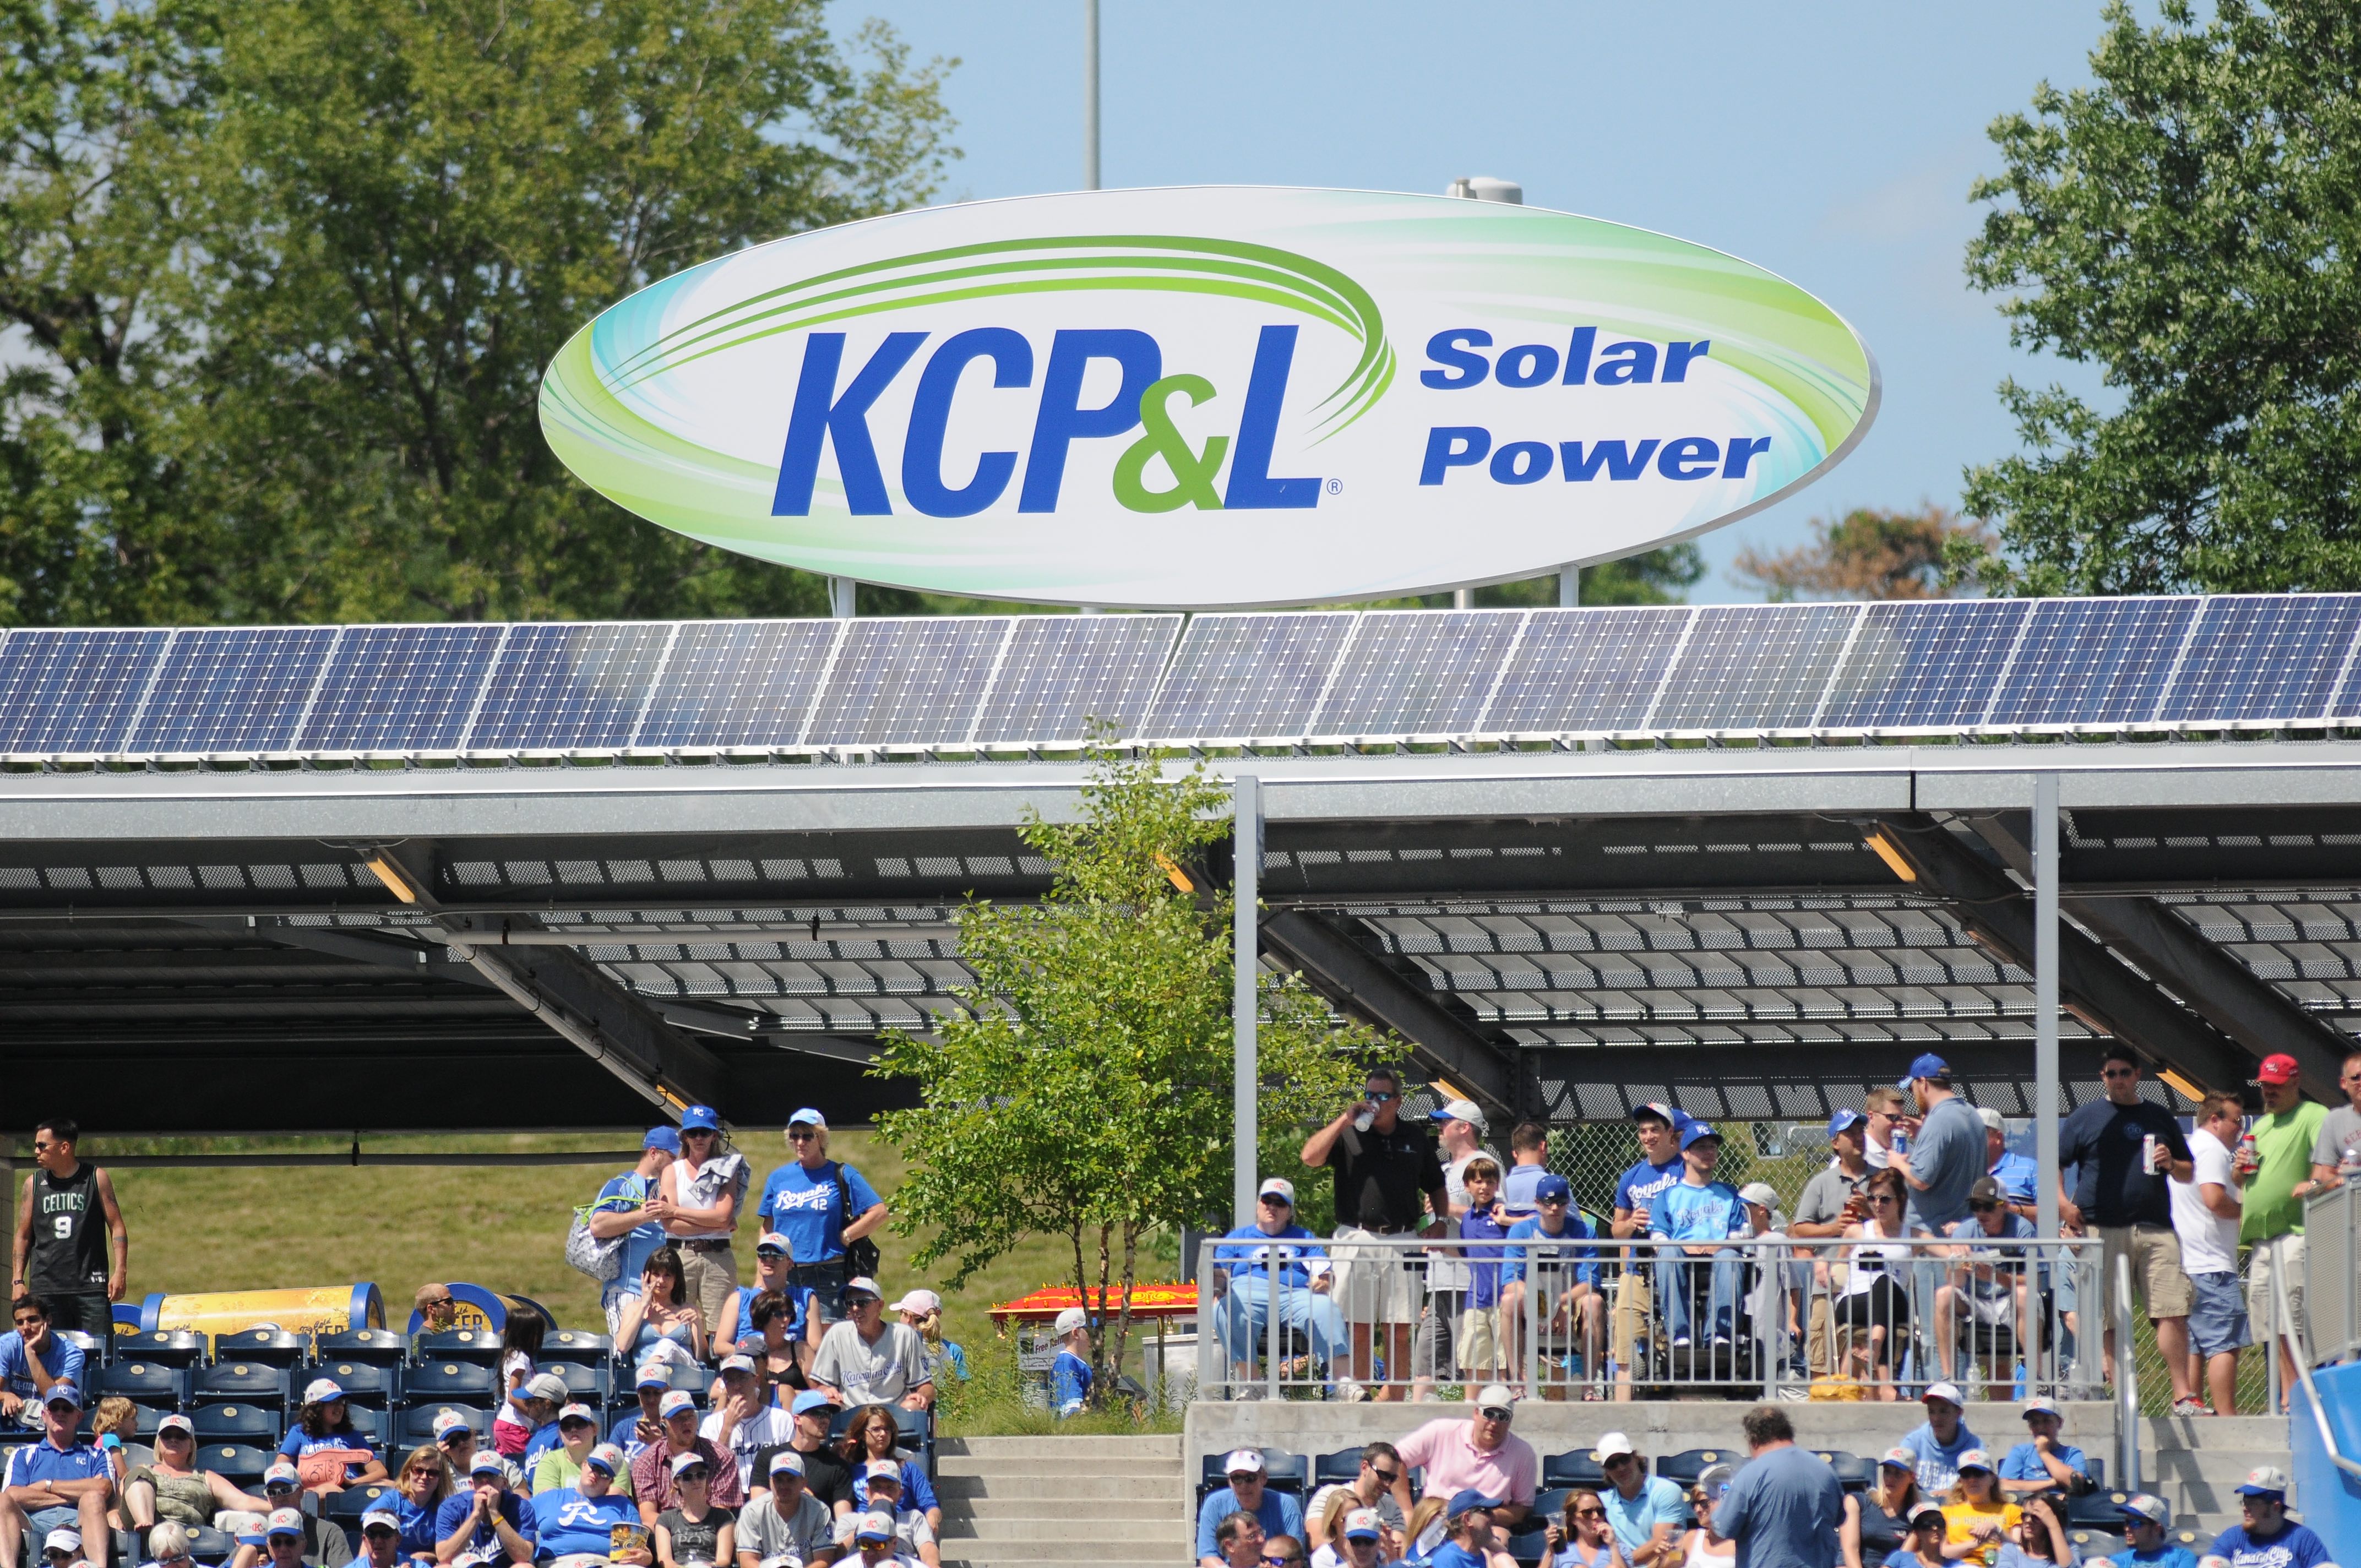 solar-energy-all-stars-the-top-5-stadiums-by-solar-power-energysage